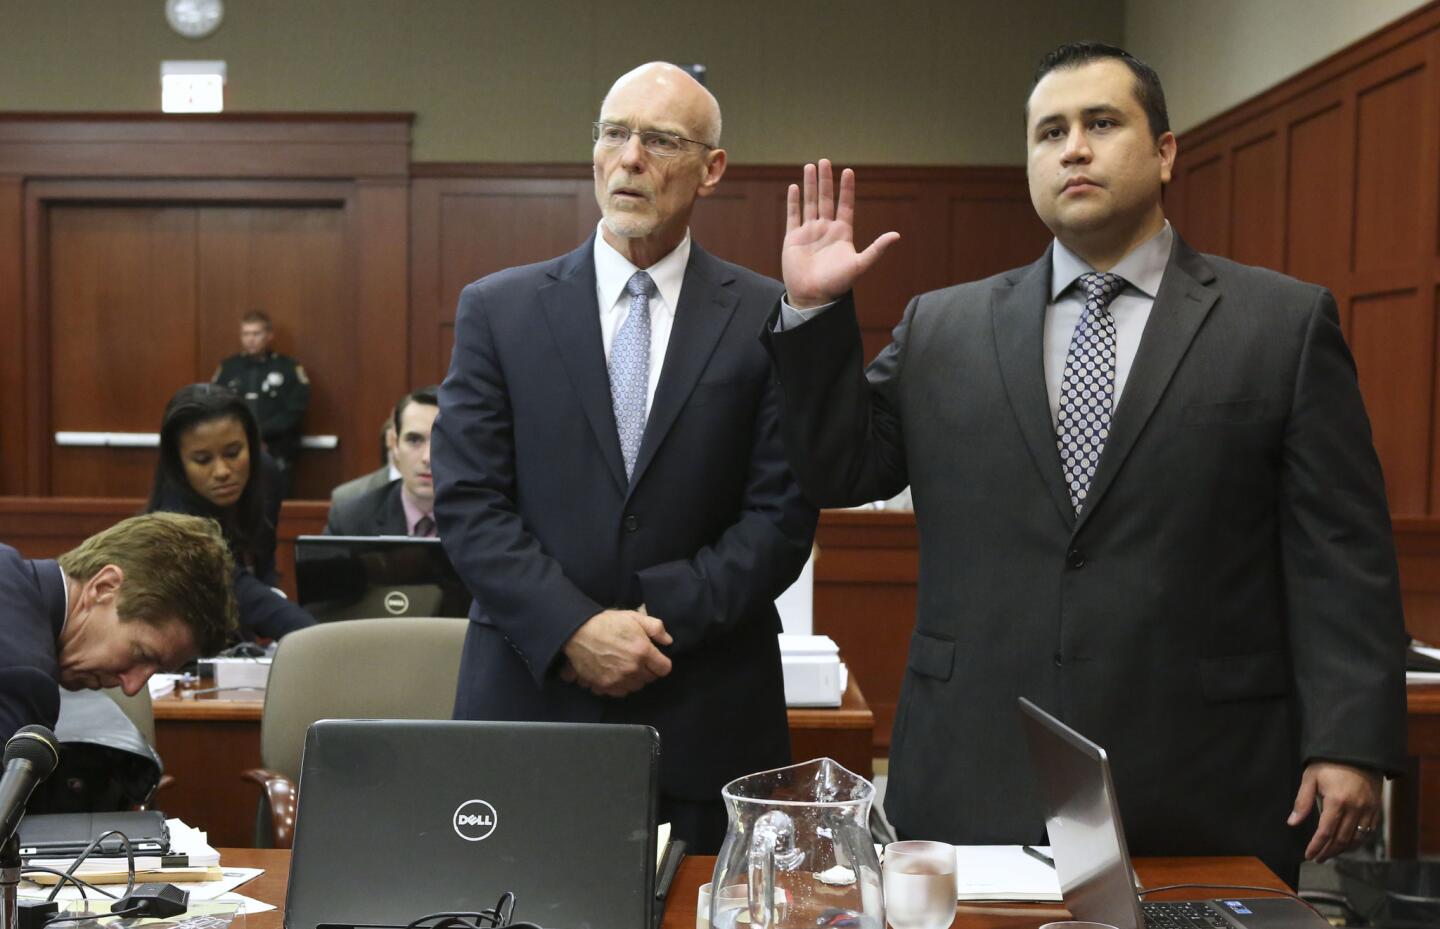 George Zimmerman Trial Day 22